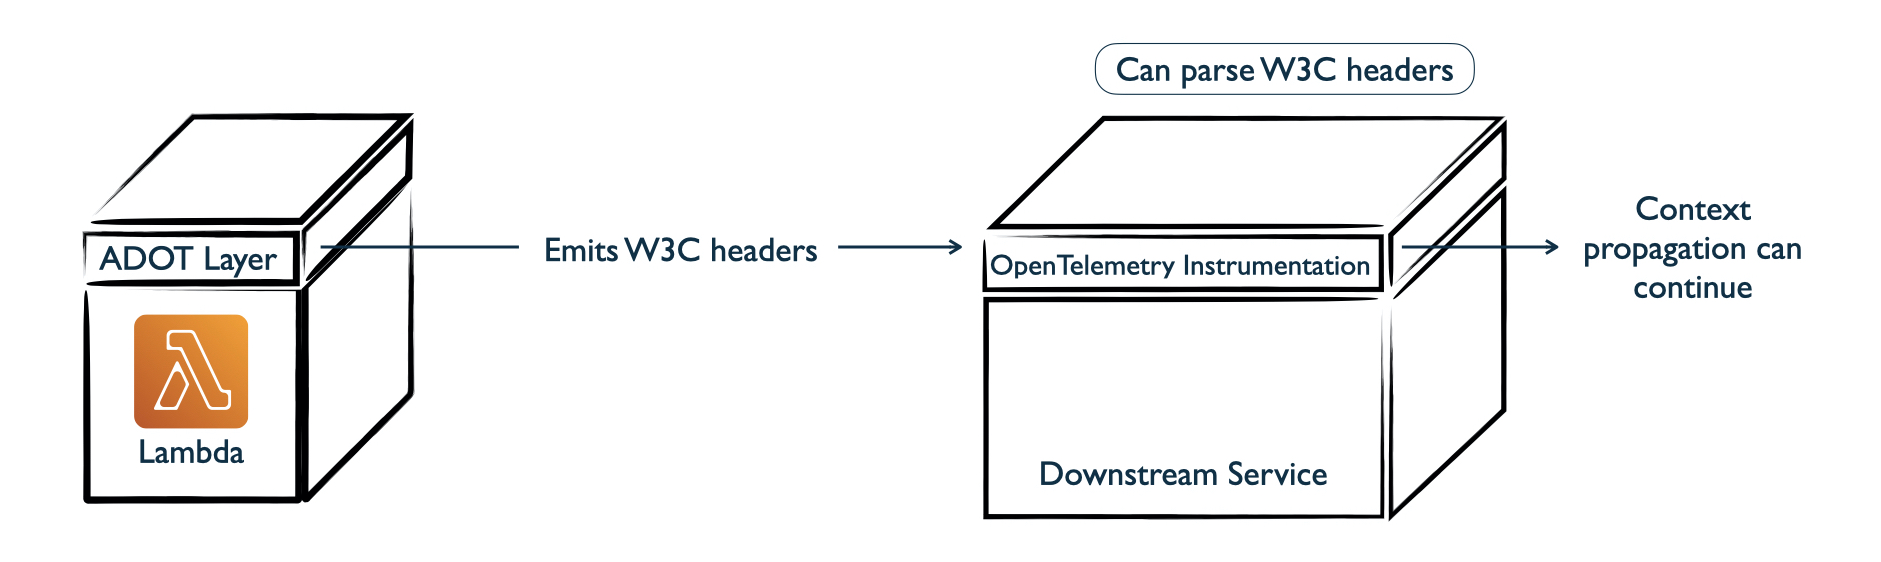 Figure 8.6 ADOT layer using W3C headers